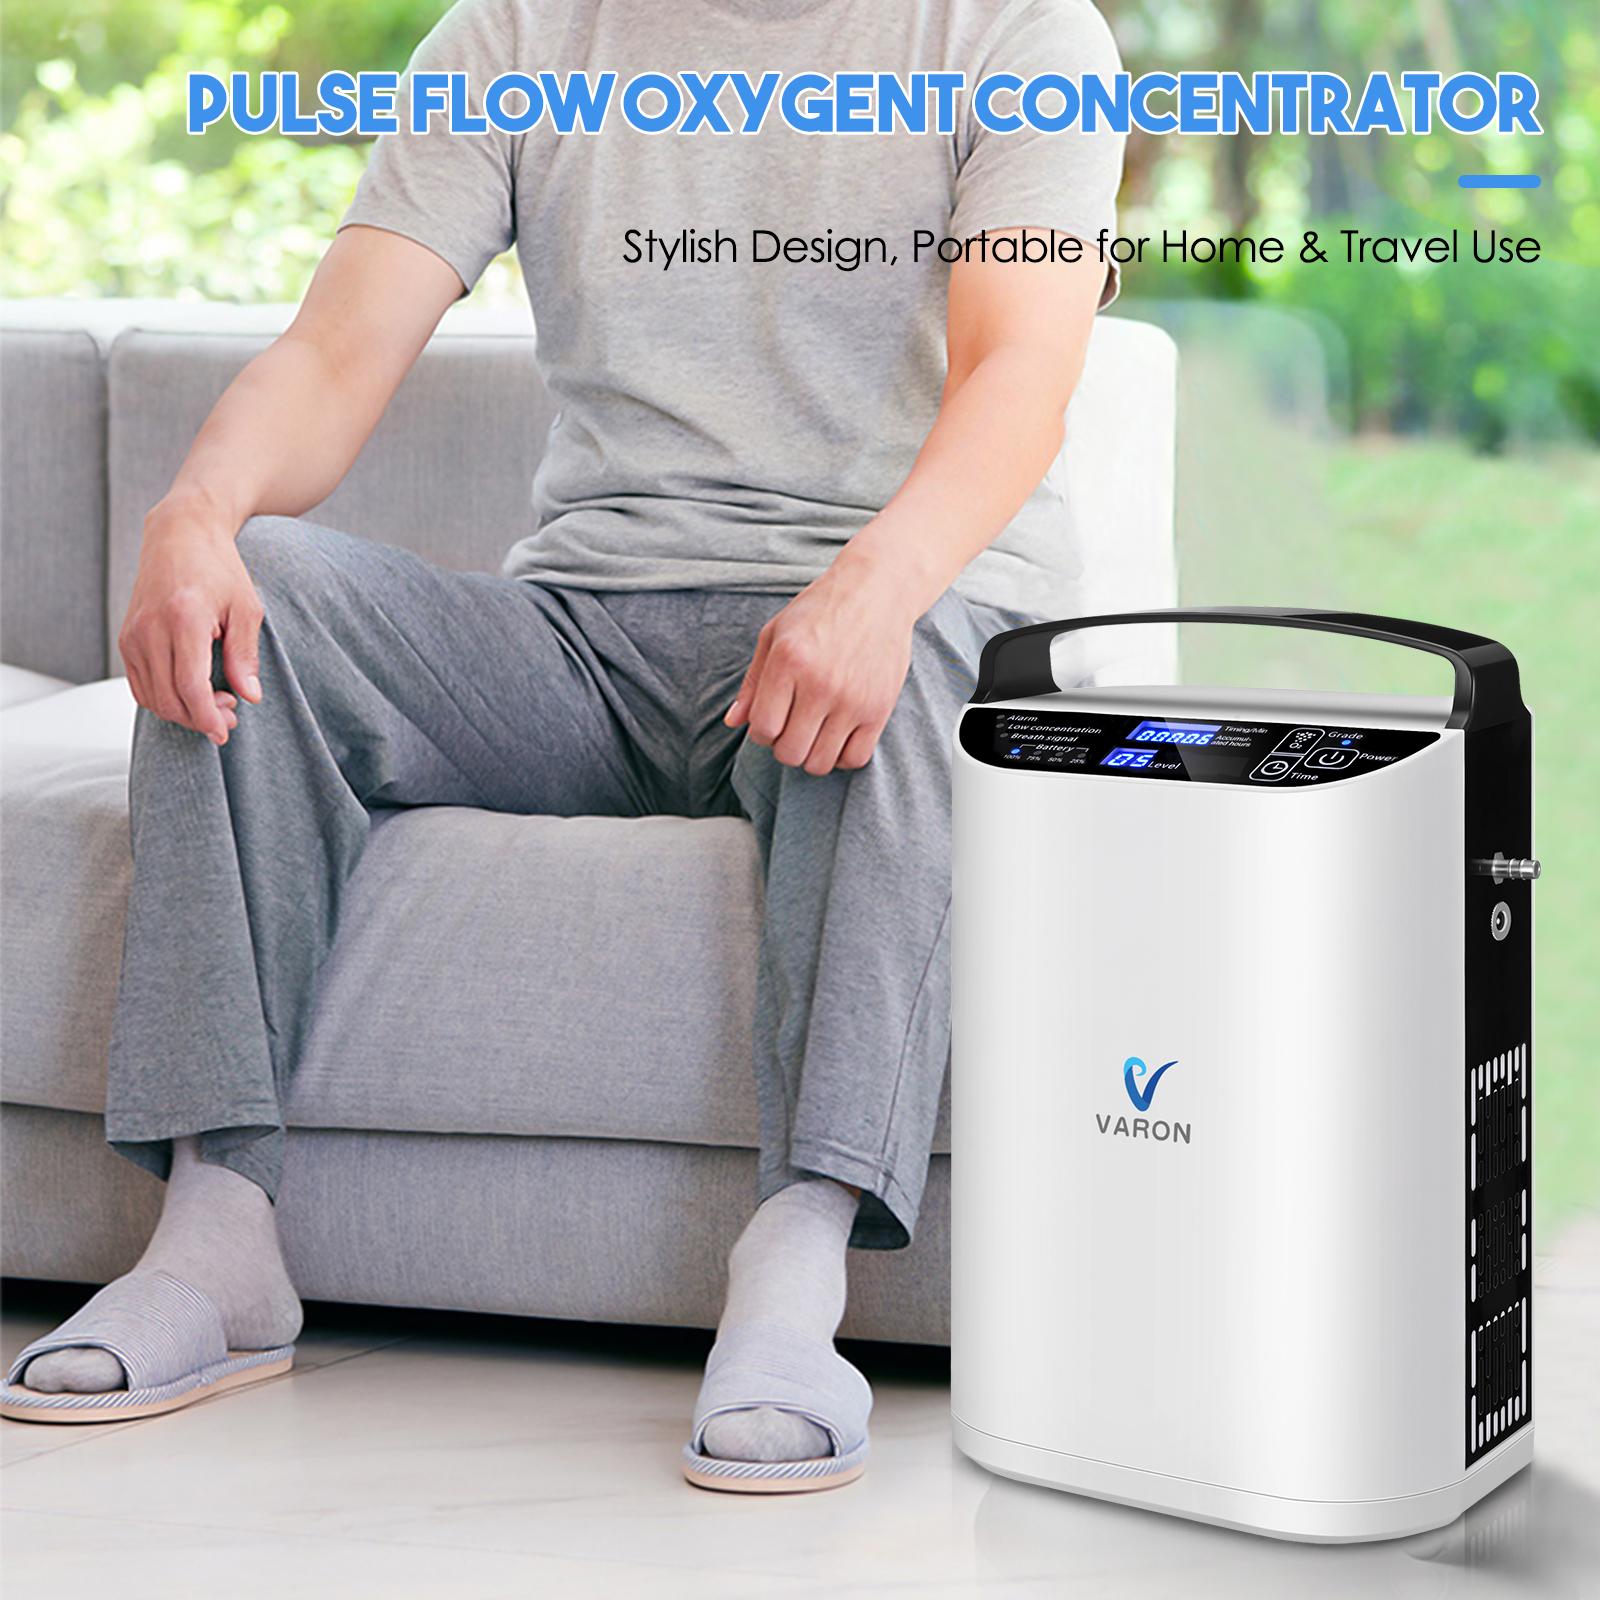 Portable 5L Pulse Flow Oxygent Concentrator Pulse Flow Oxygen Making Machine Without Battery 48 Hours Oxygen Supply 110V/220V